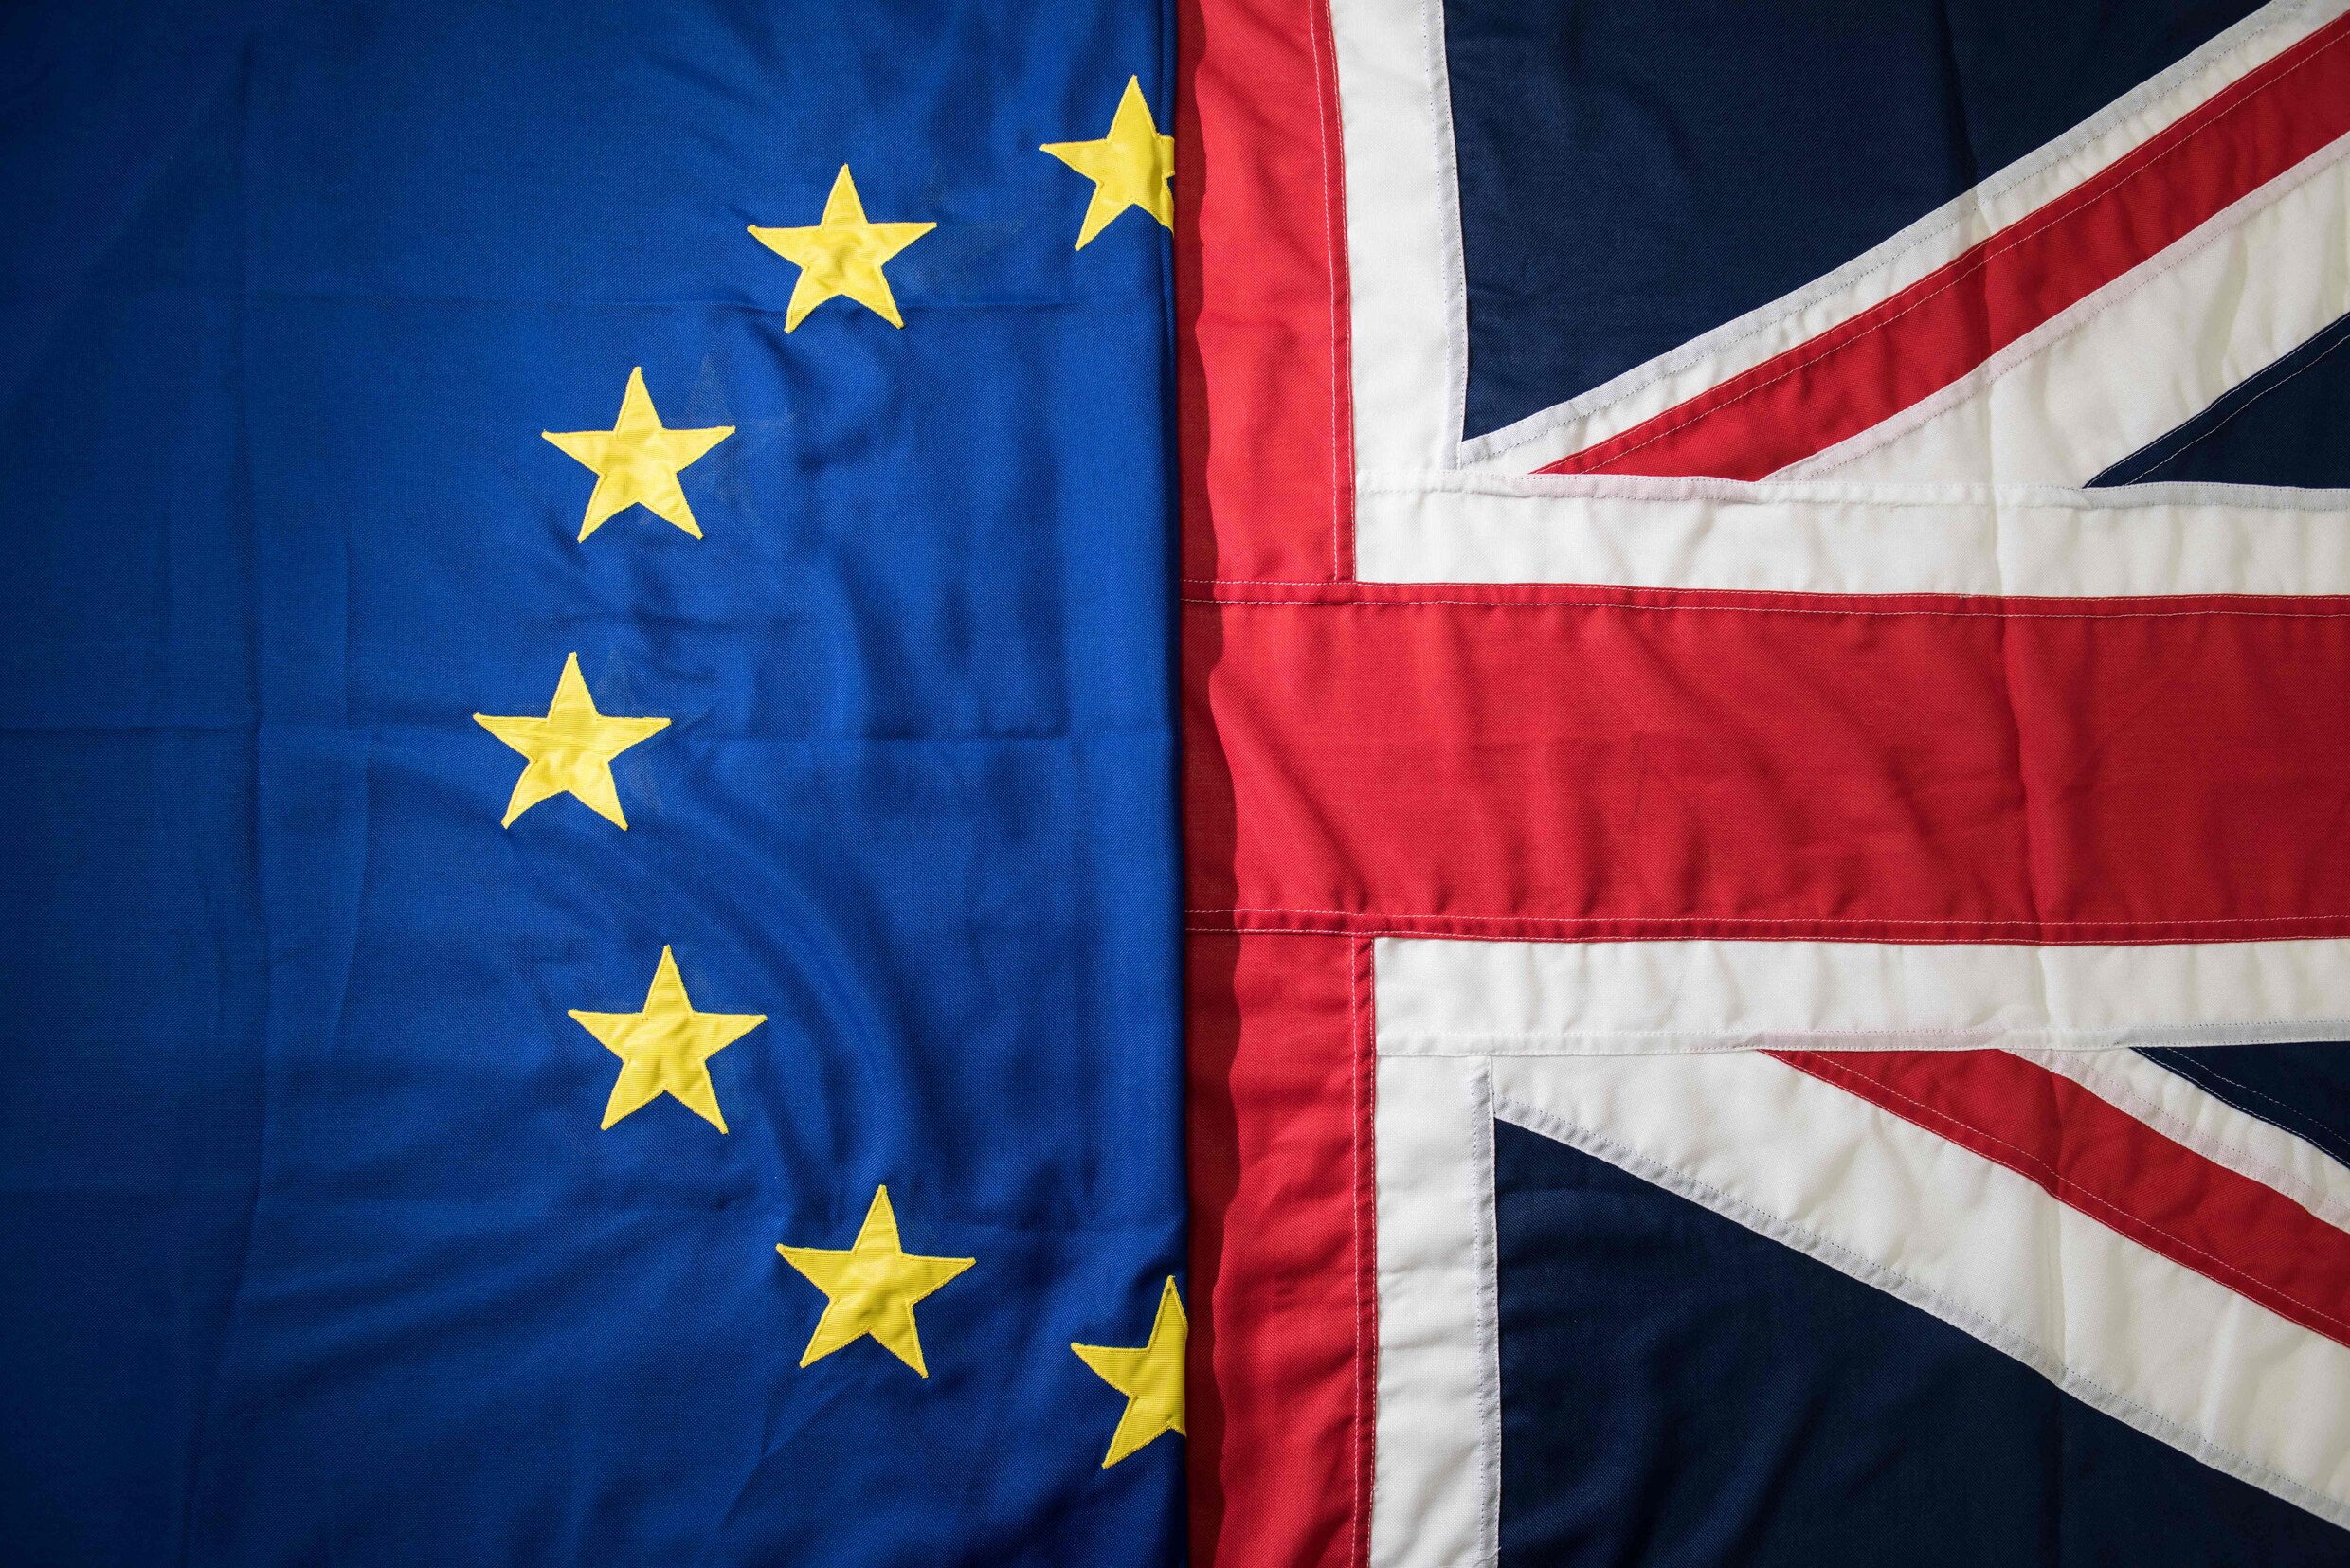 Premier May stelt cruciale stemming over brexit uit - Tusk: geen nieuwe onderhandelingen